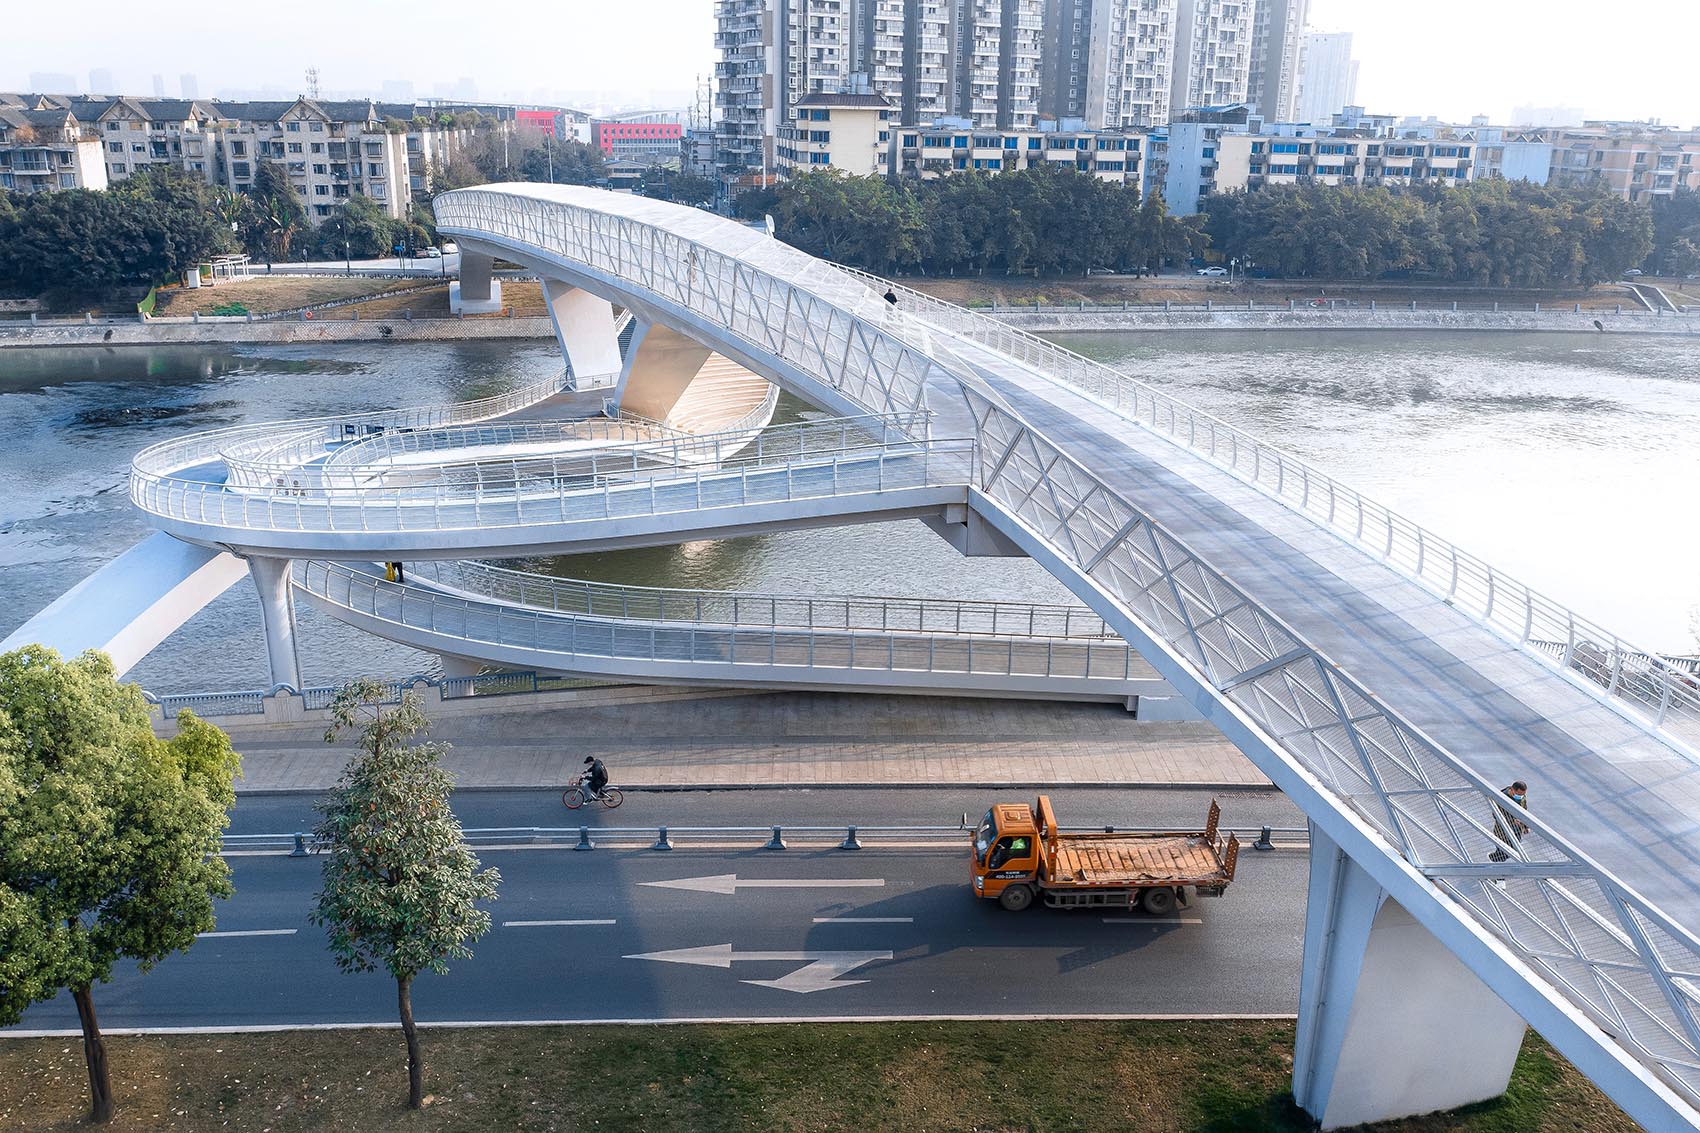 Daylight Shot 五岔子大橋 - Wuchazi Bridge (INFINITE LOOP)